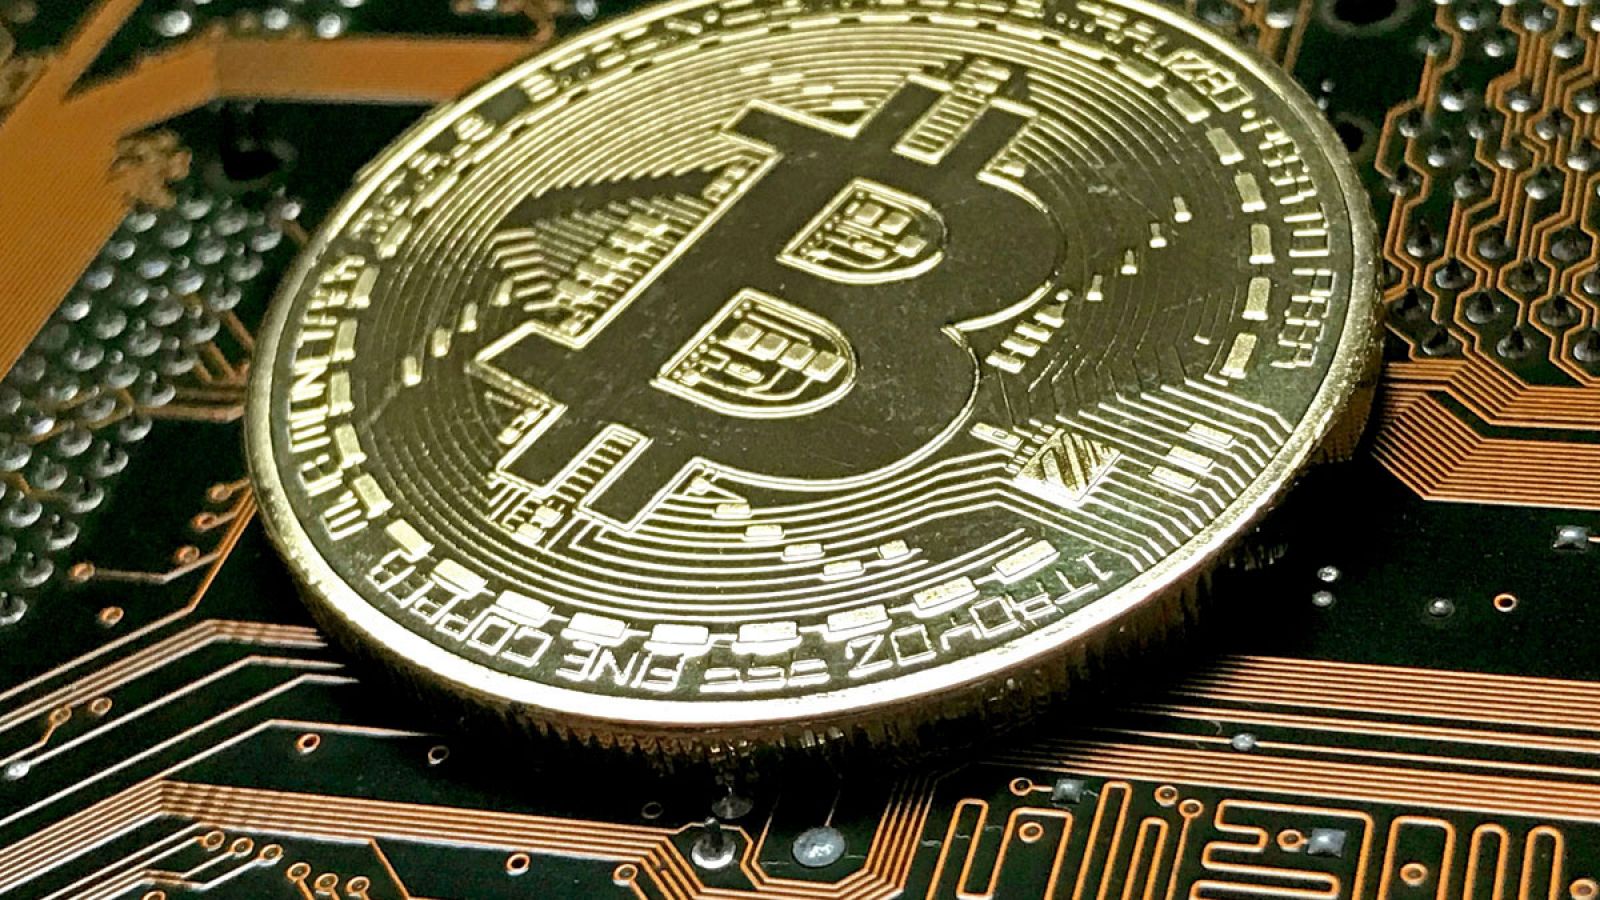 Vista de una moneda simbólica de bitcoin